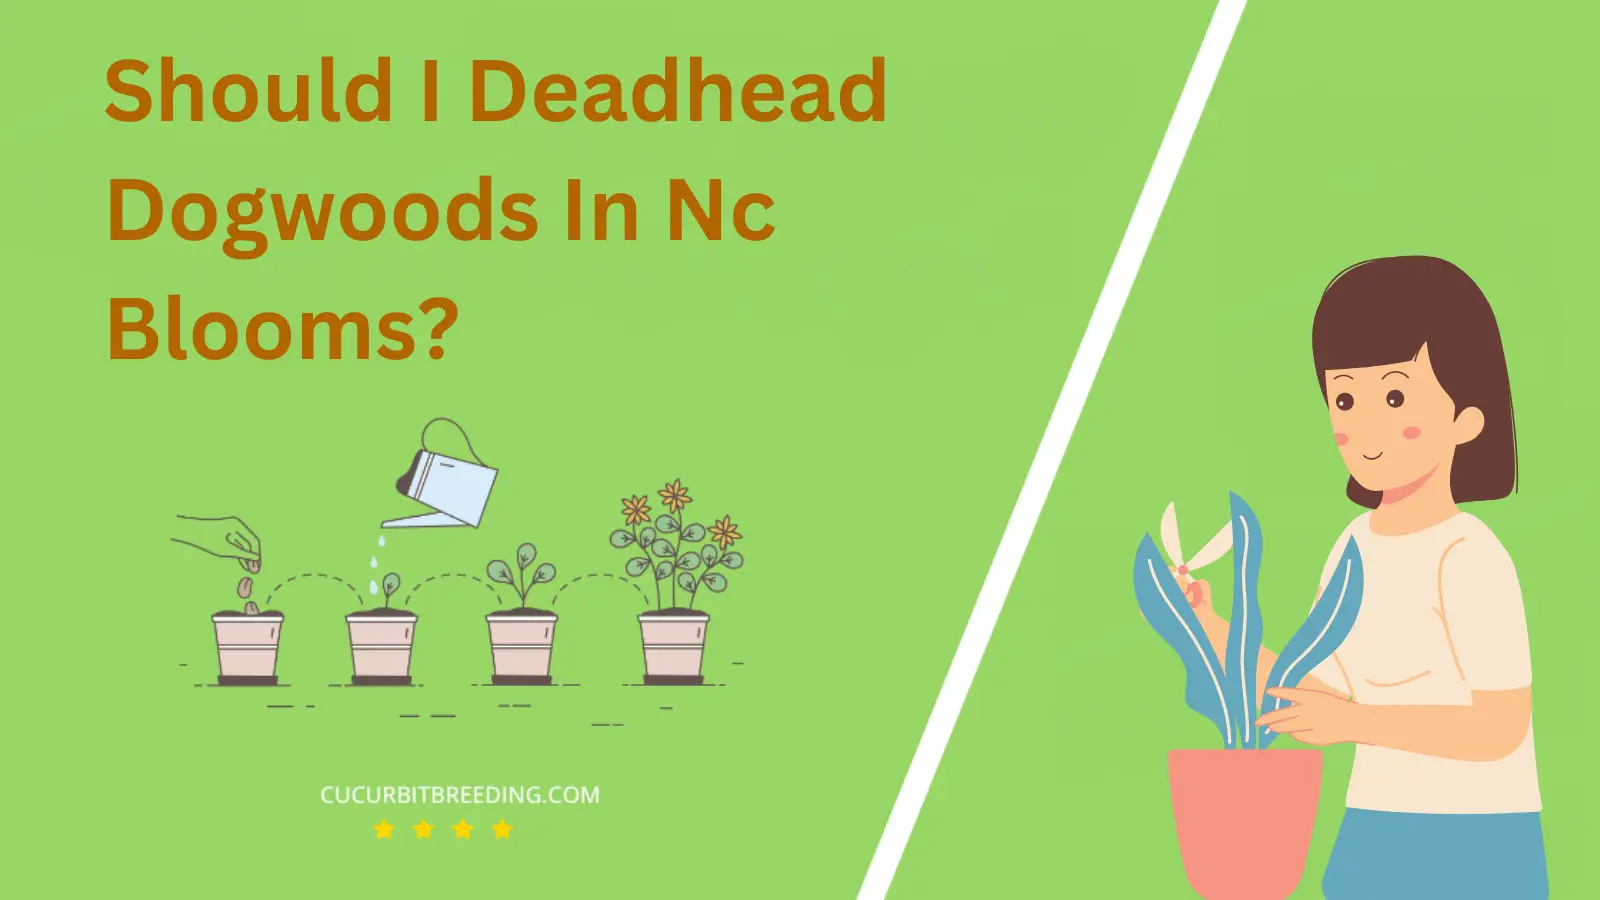 Should I Deadhead Dogwoods In Nc Blooms?